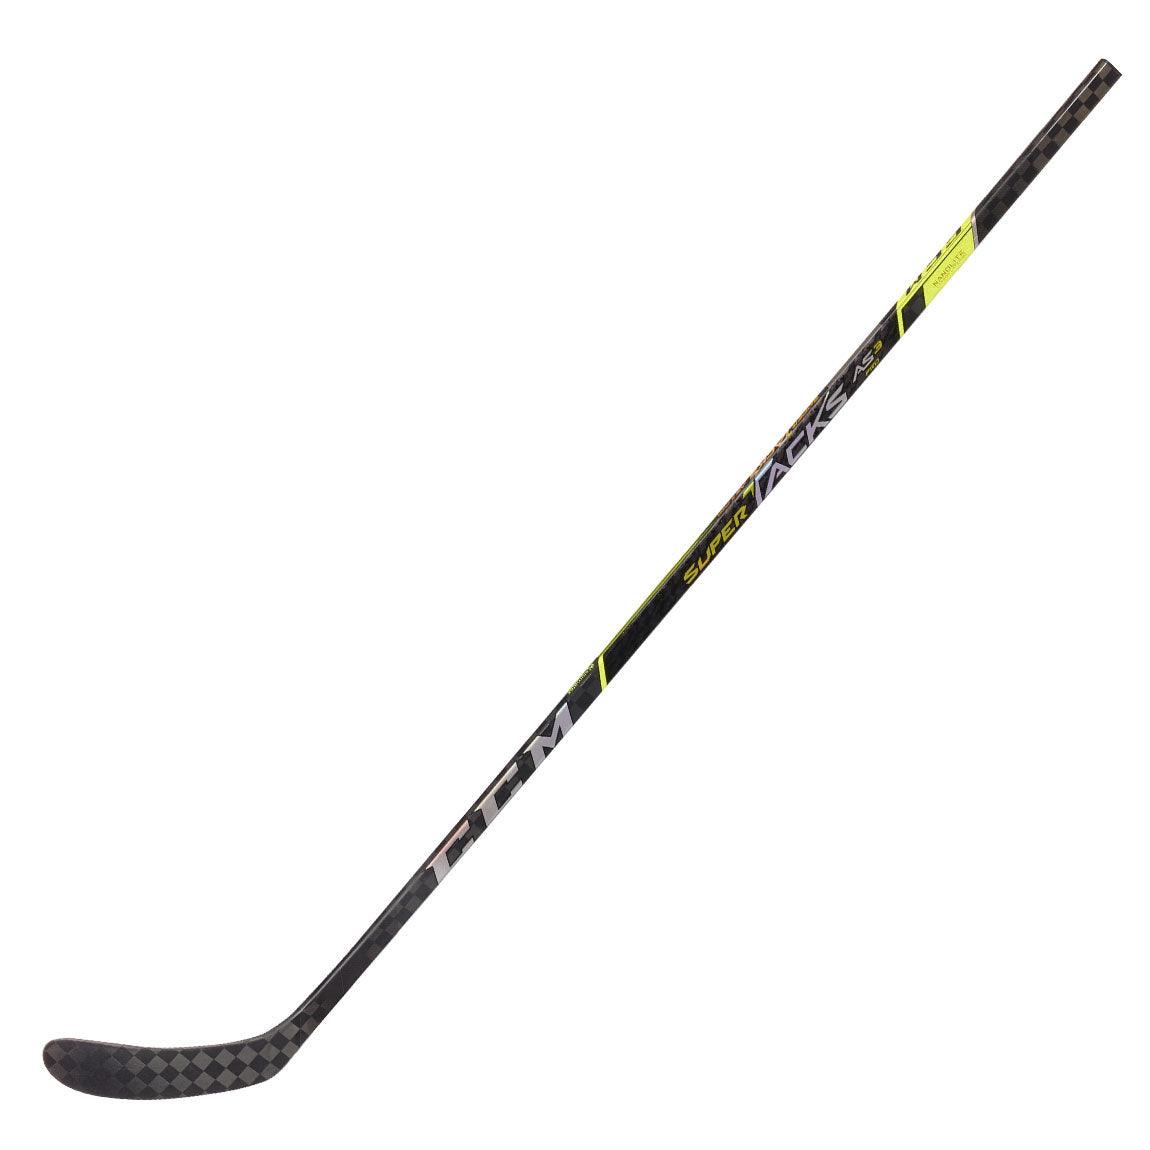 Super Tacks AS3 Pro Hockey Stick - Intermediate - Sports Excellence